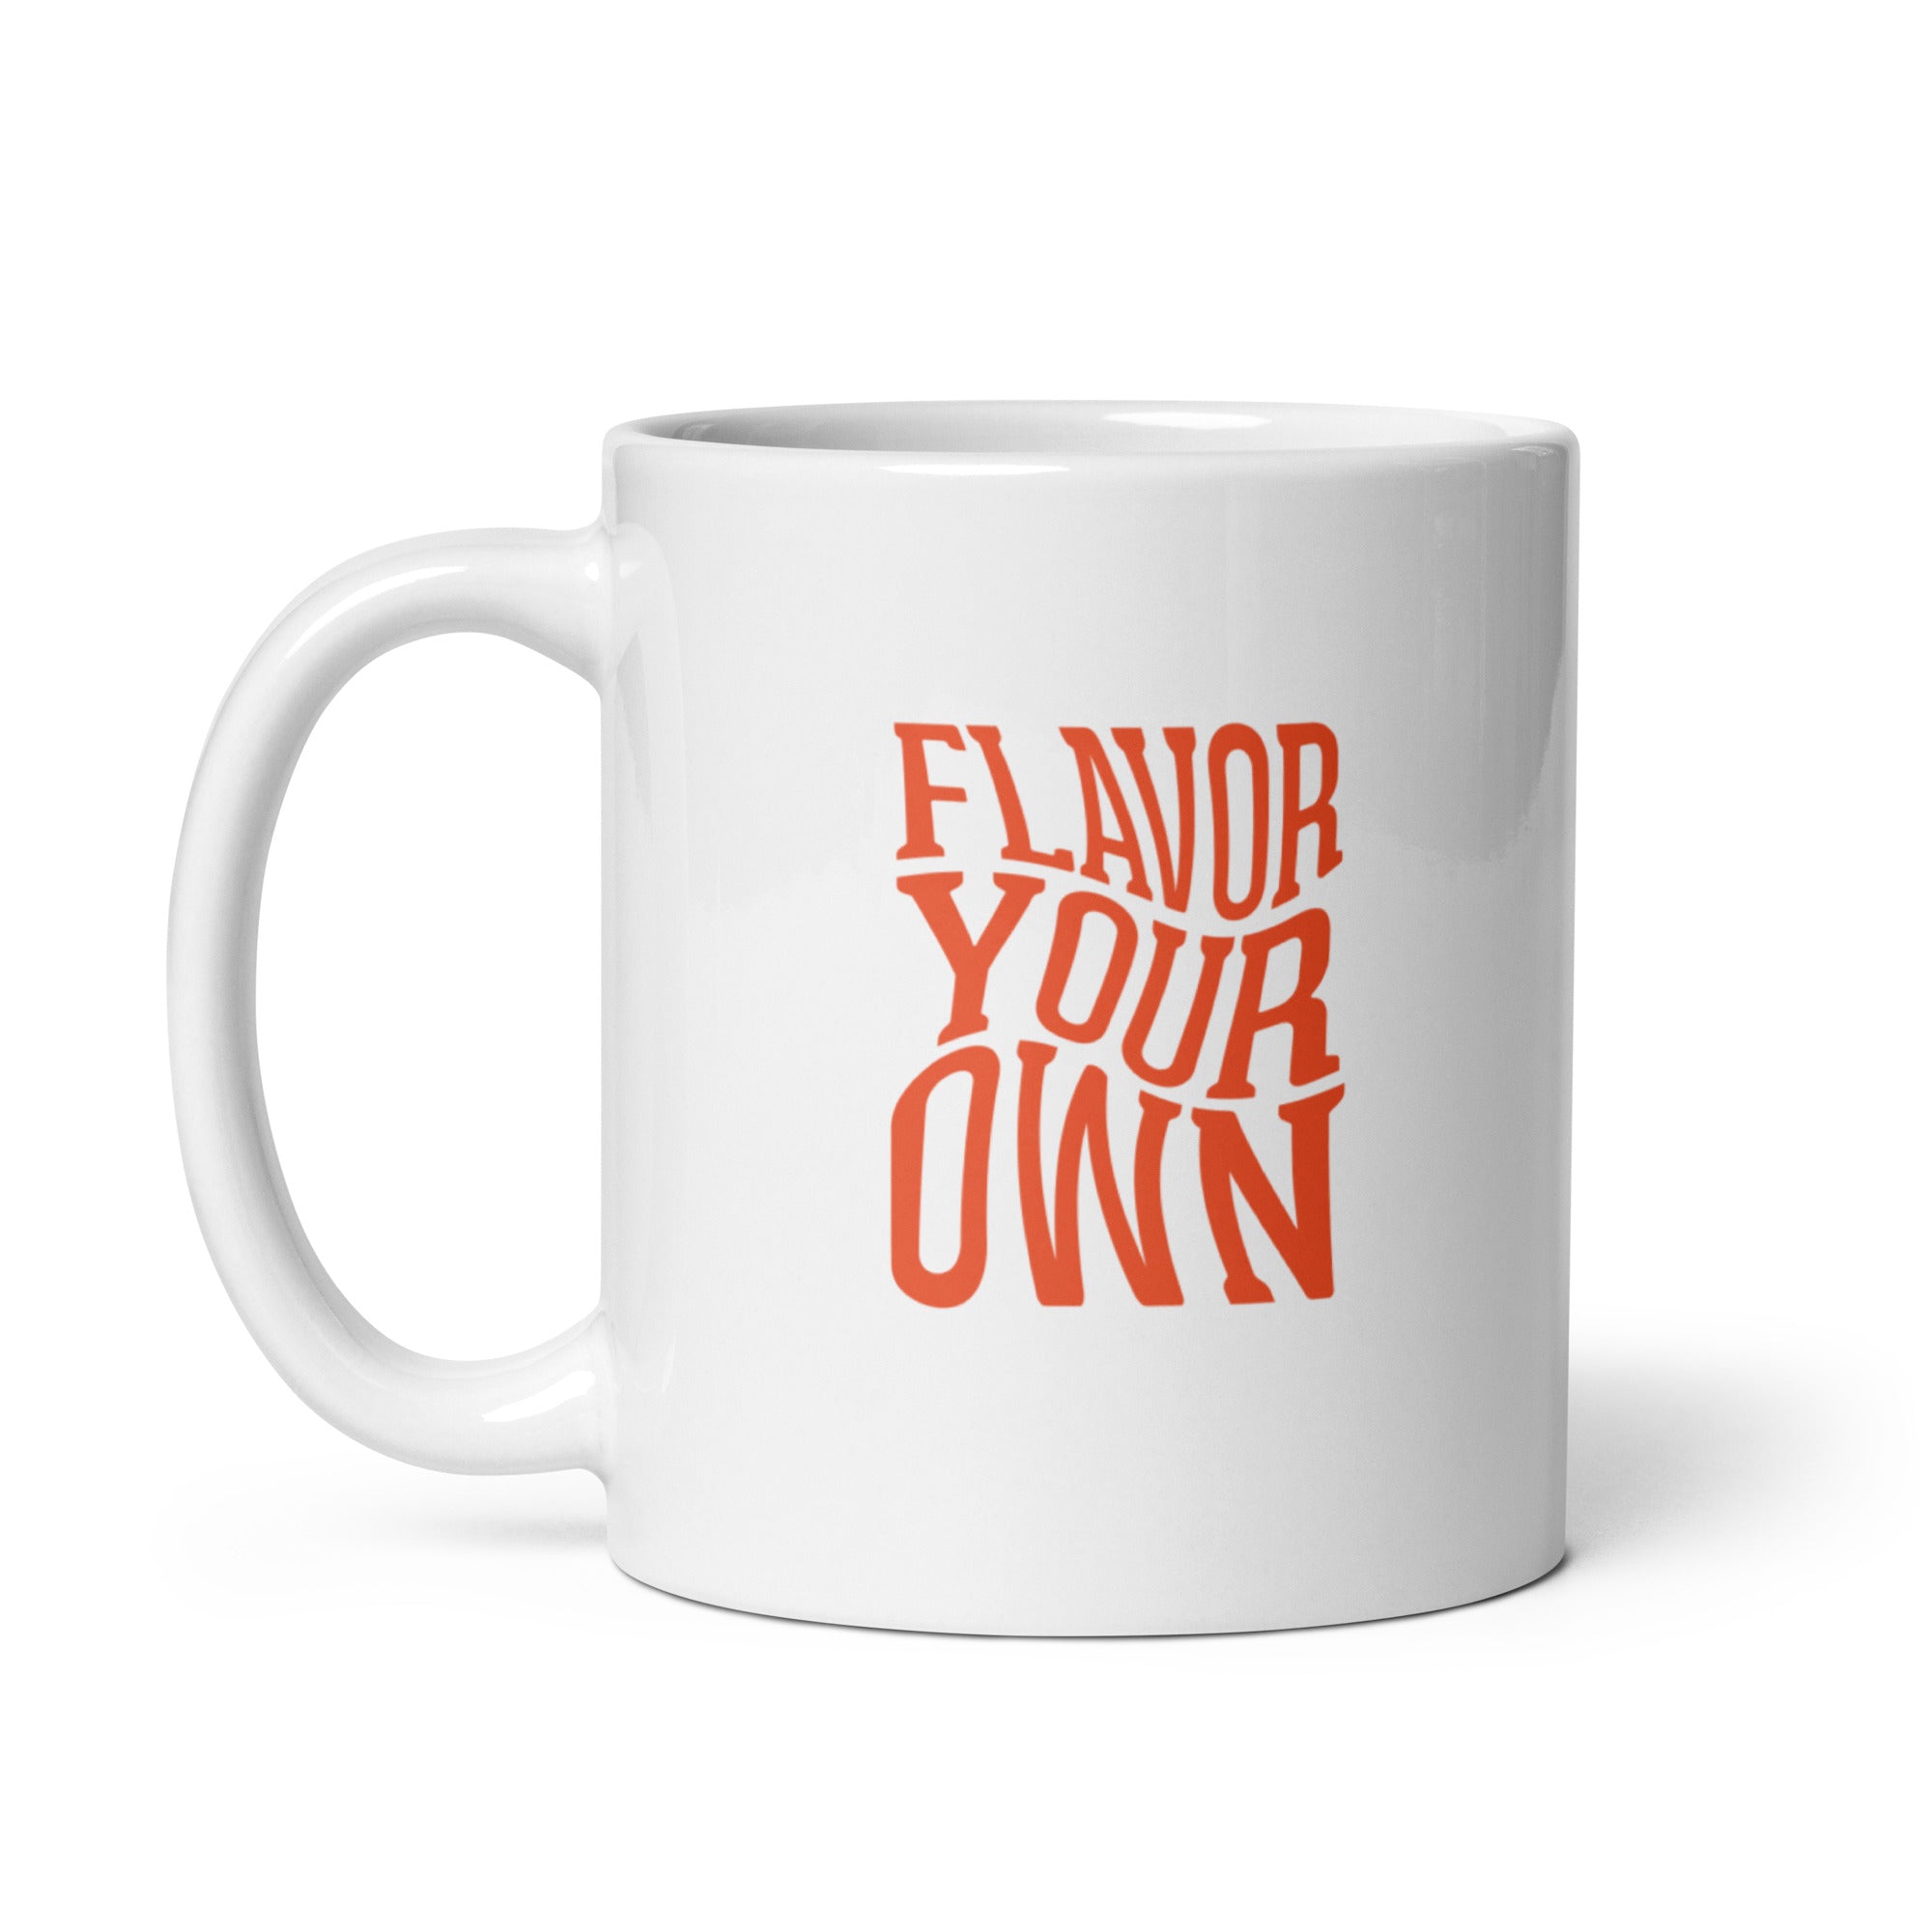 Flavor Your Own / White & Orange coffee mug